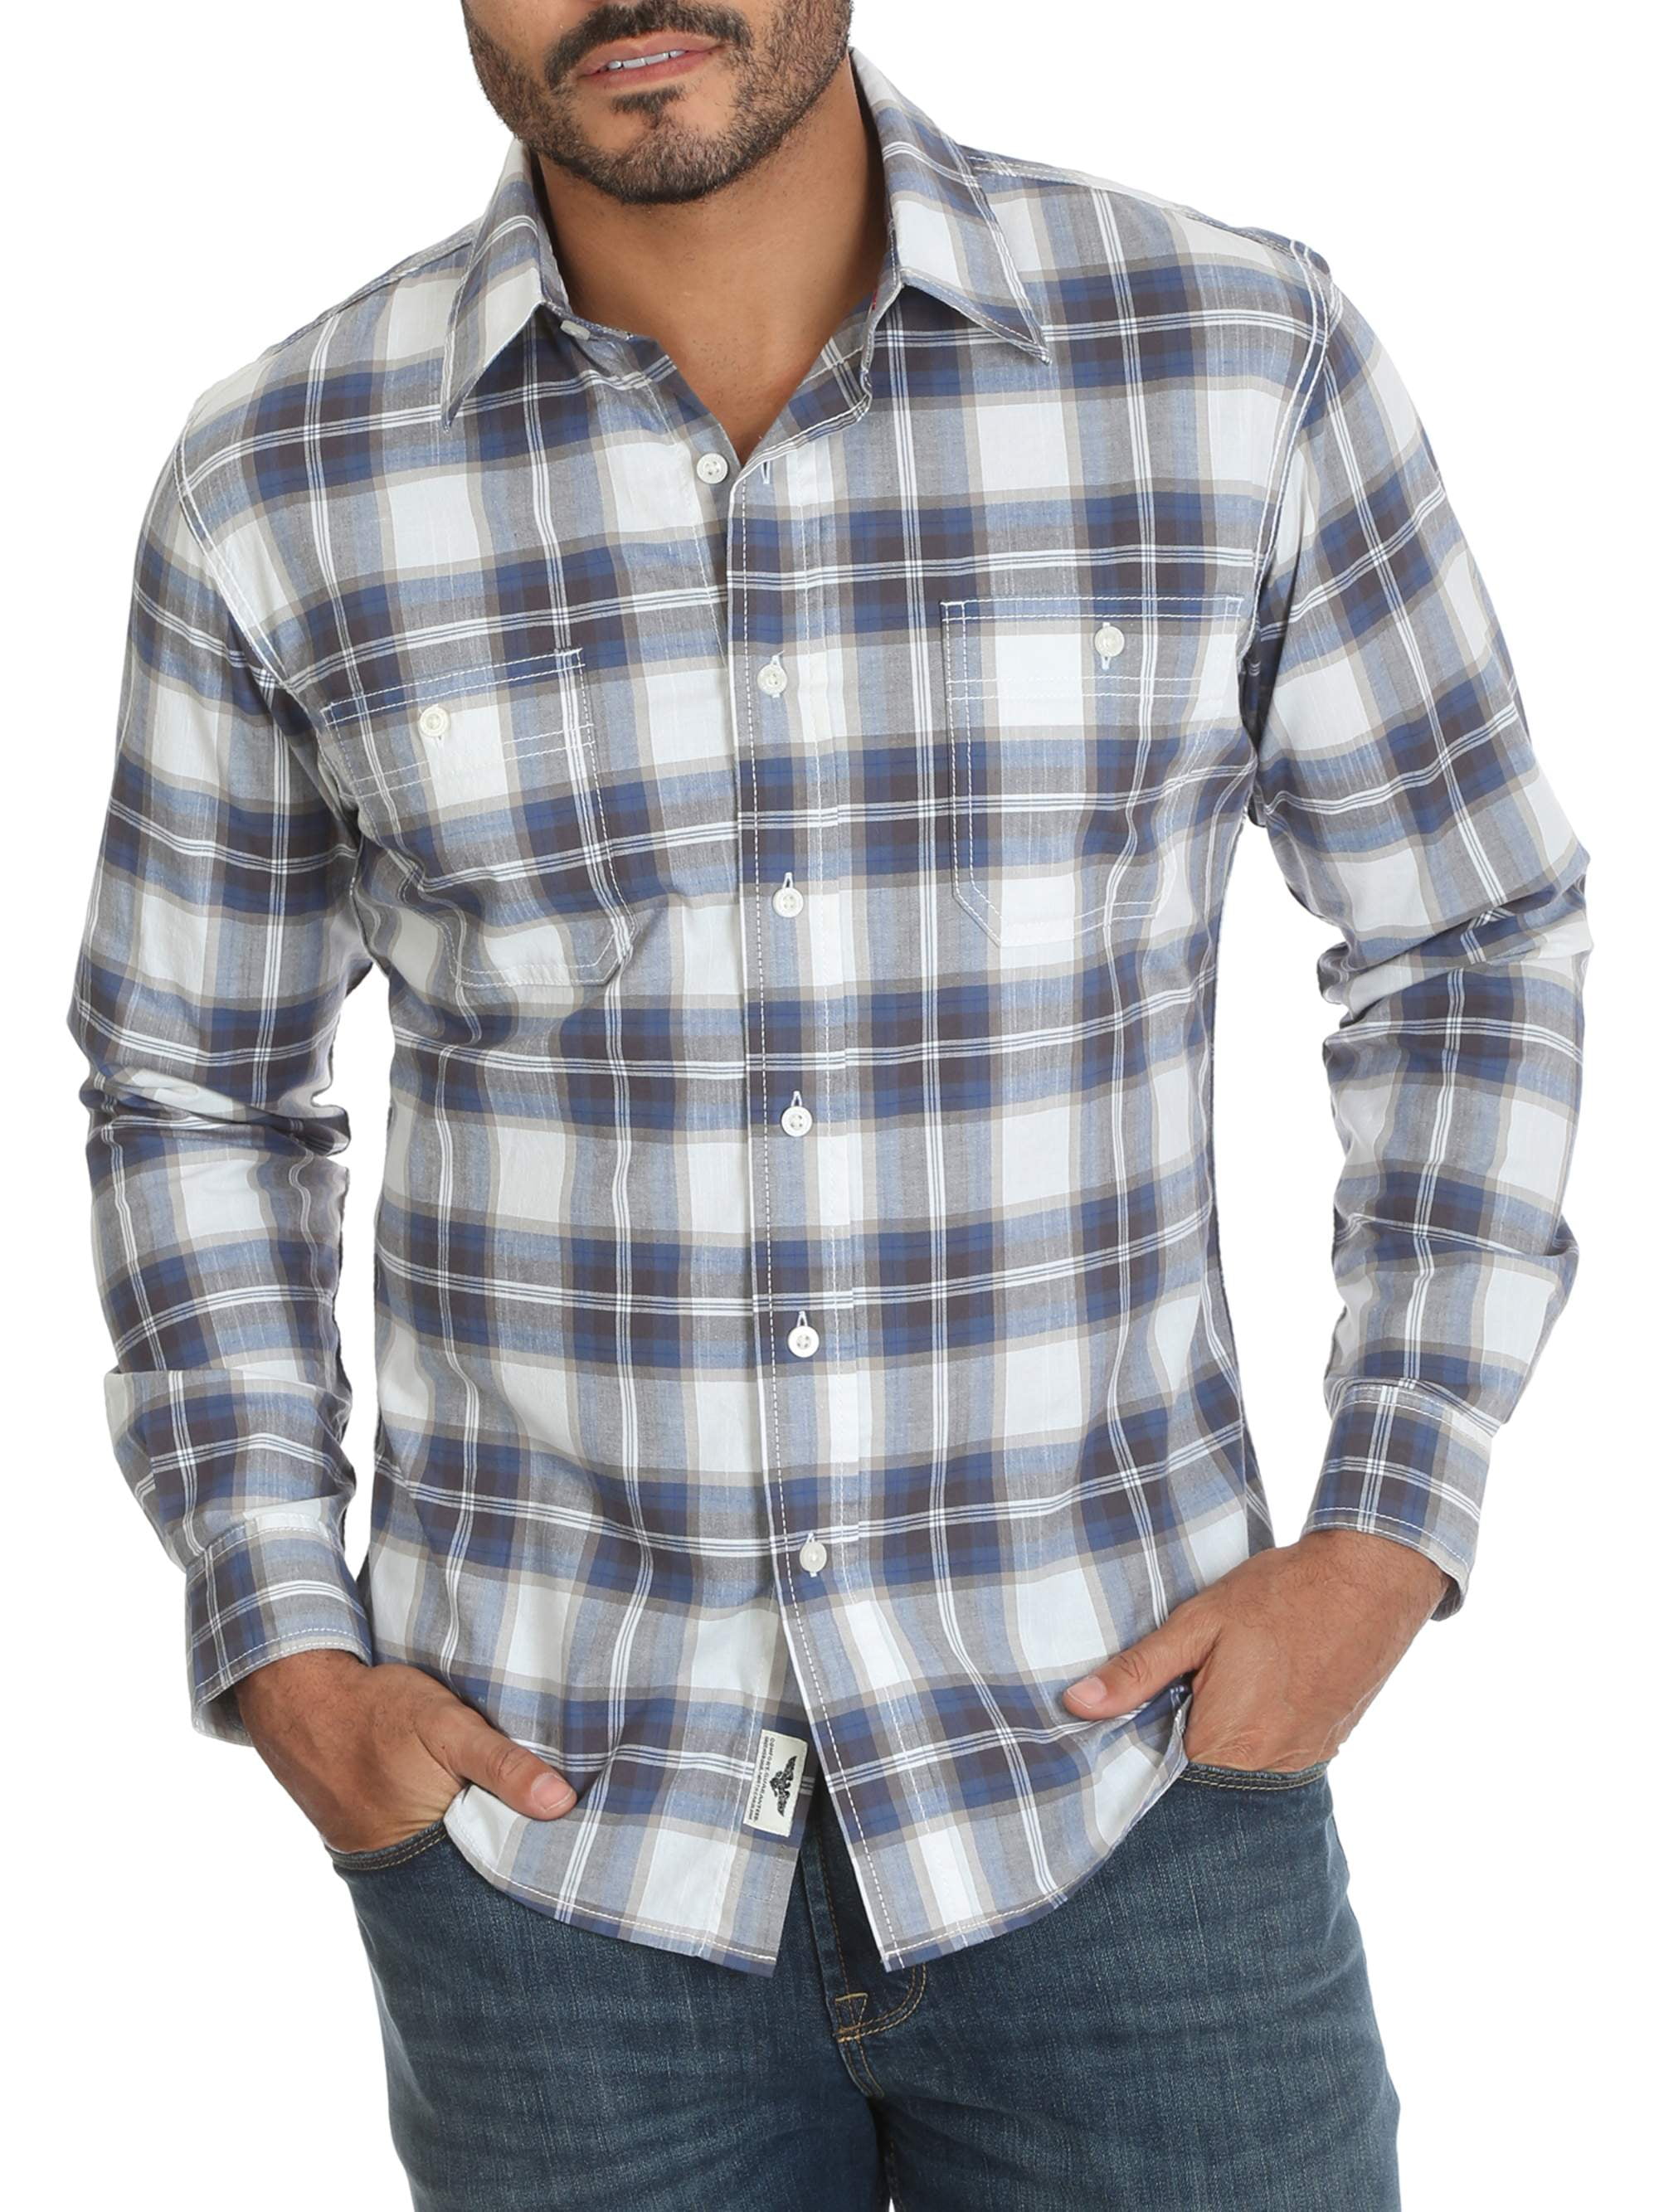 Wrangler Men's Premium Slim Fit Plaid Shirt - Walmart.com